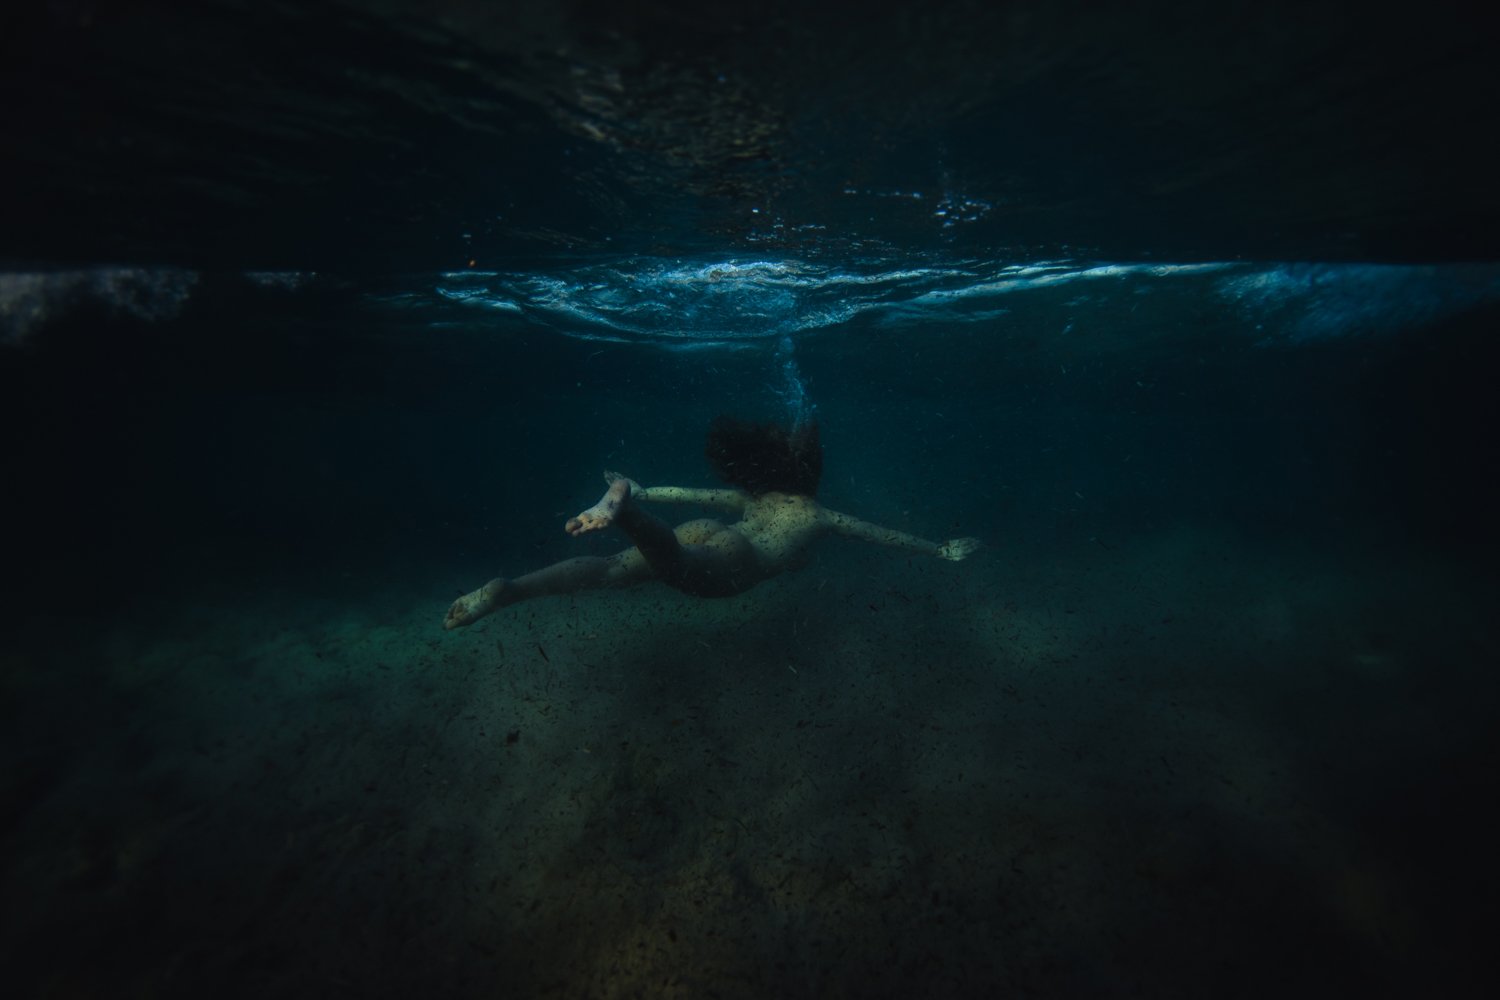 underwater corse corsica sea mediterranean island france french photographer photographe ajaccio Krista Espino Capo di feno wave nude nue femme woman fine art photography-68.jpg